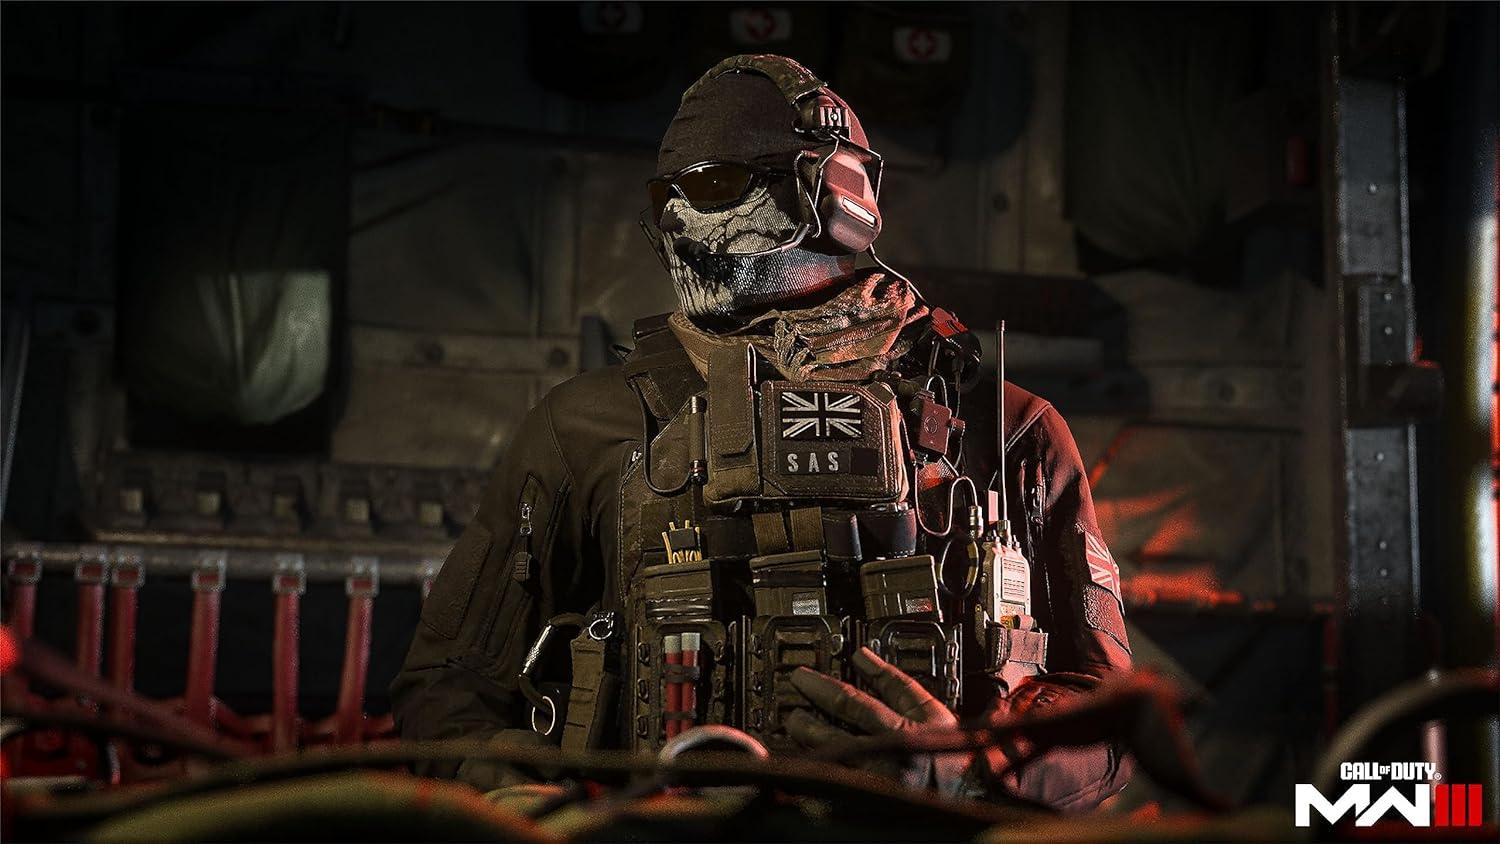 Call of Duty: Modern Warfare III (PS5) - GameStore.mt | Powered by Flutisat